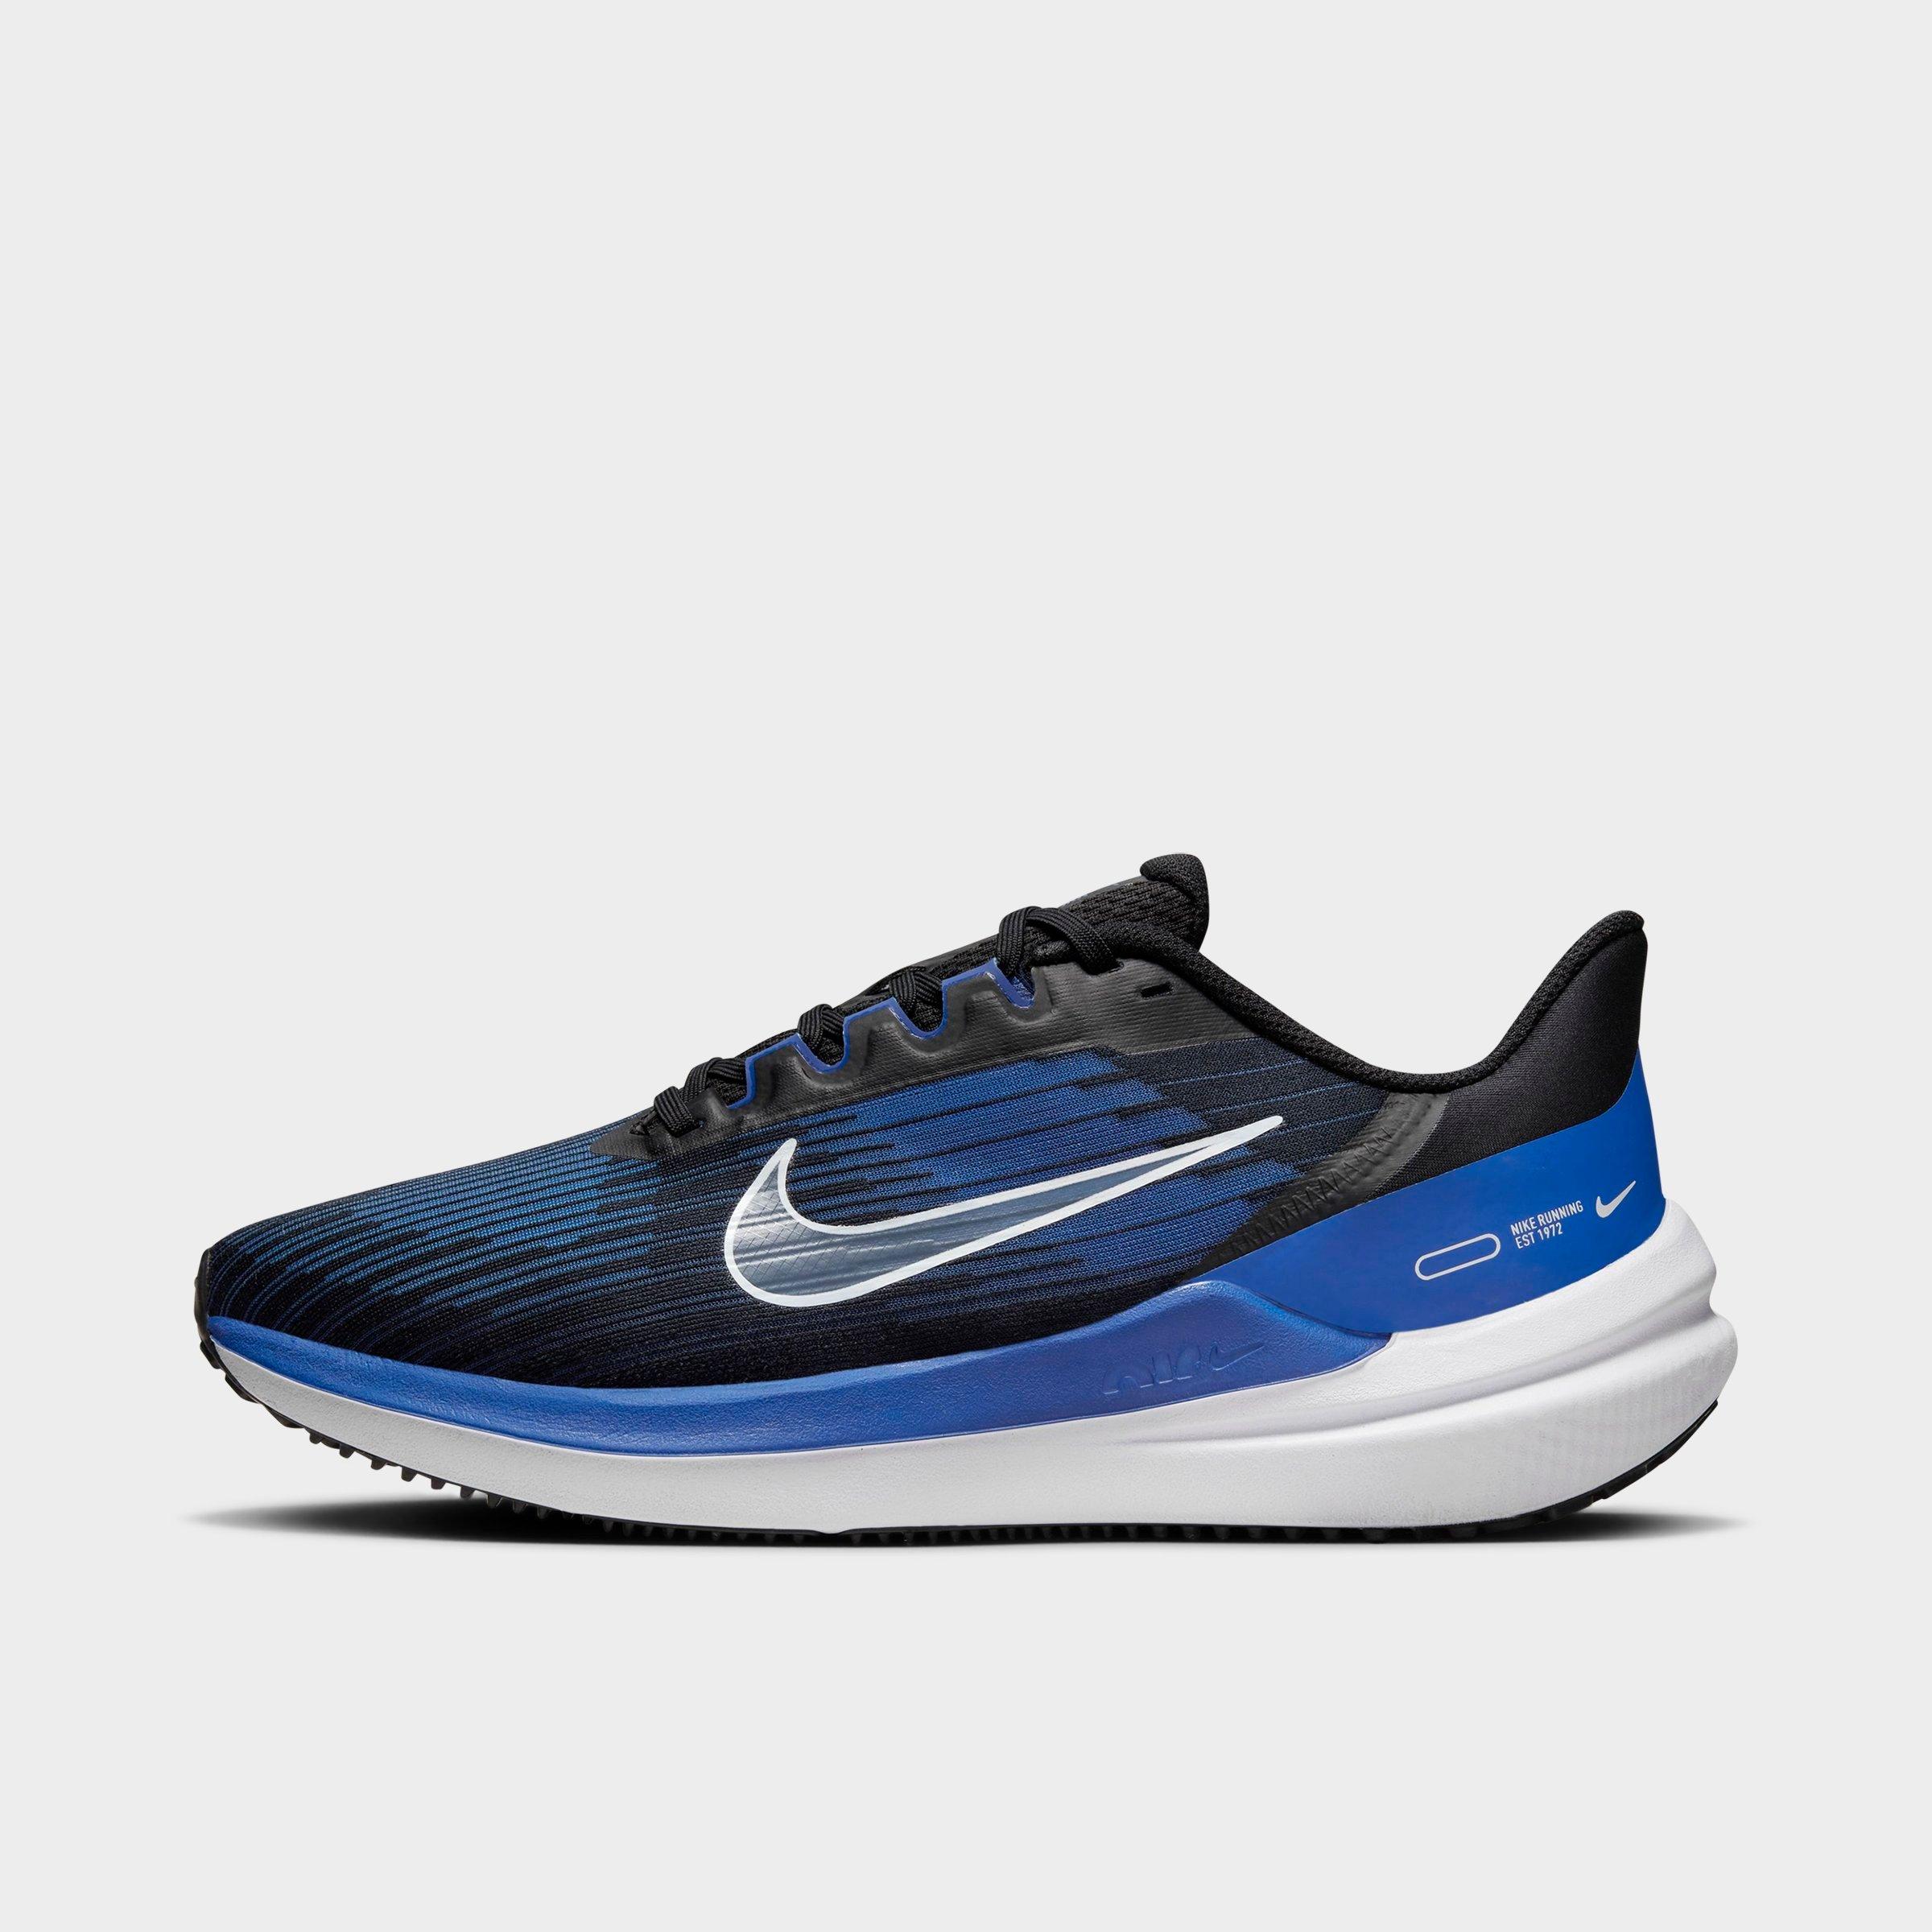 Mens Nike Air Winflo 9 Running Shoes